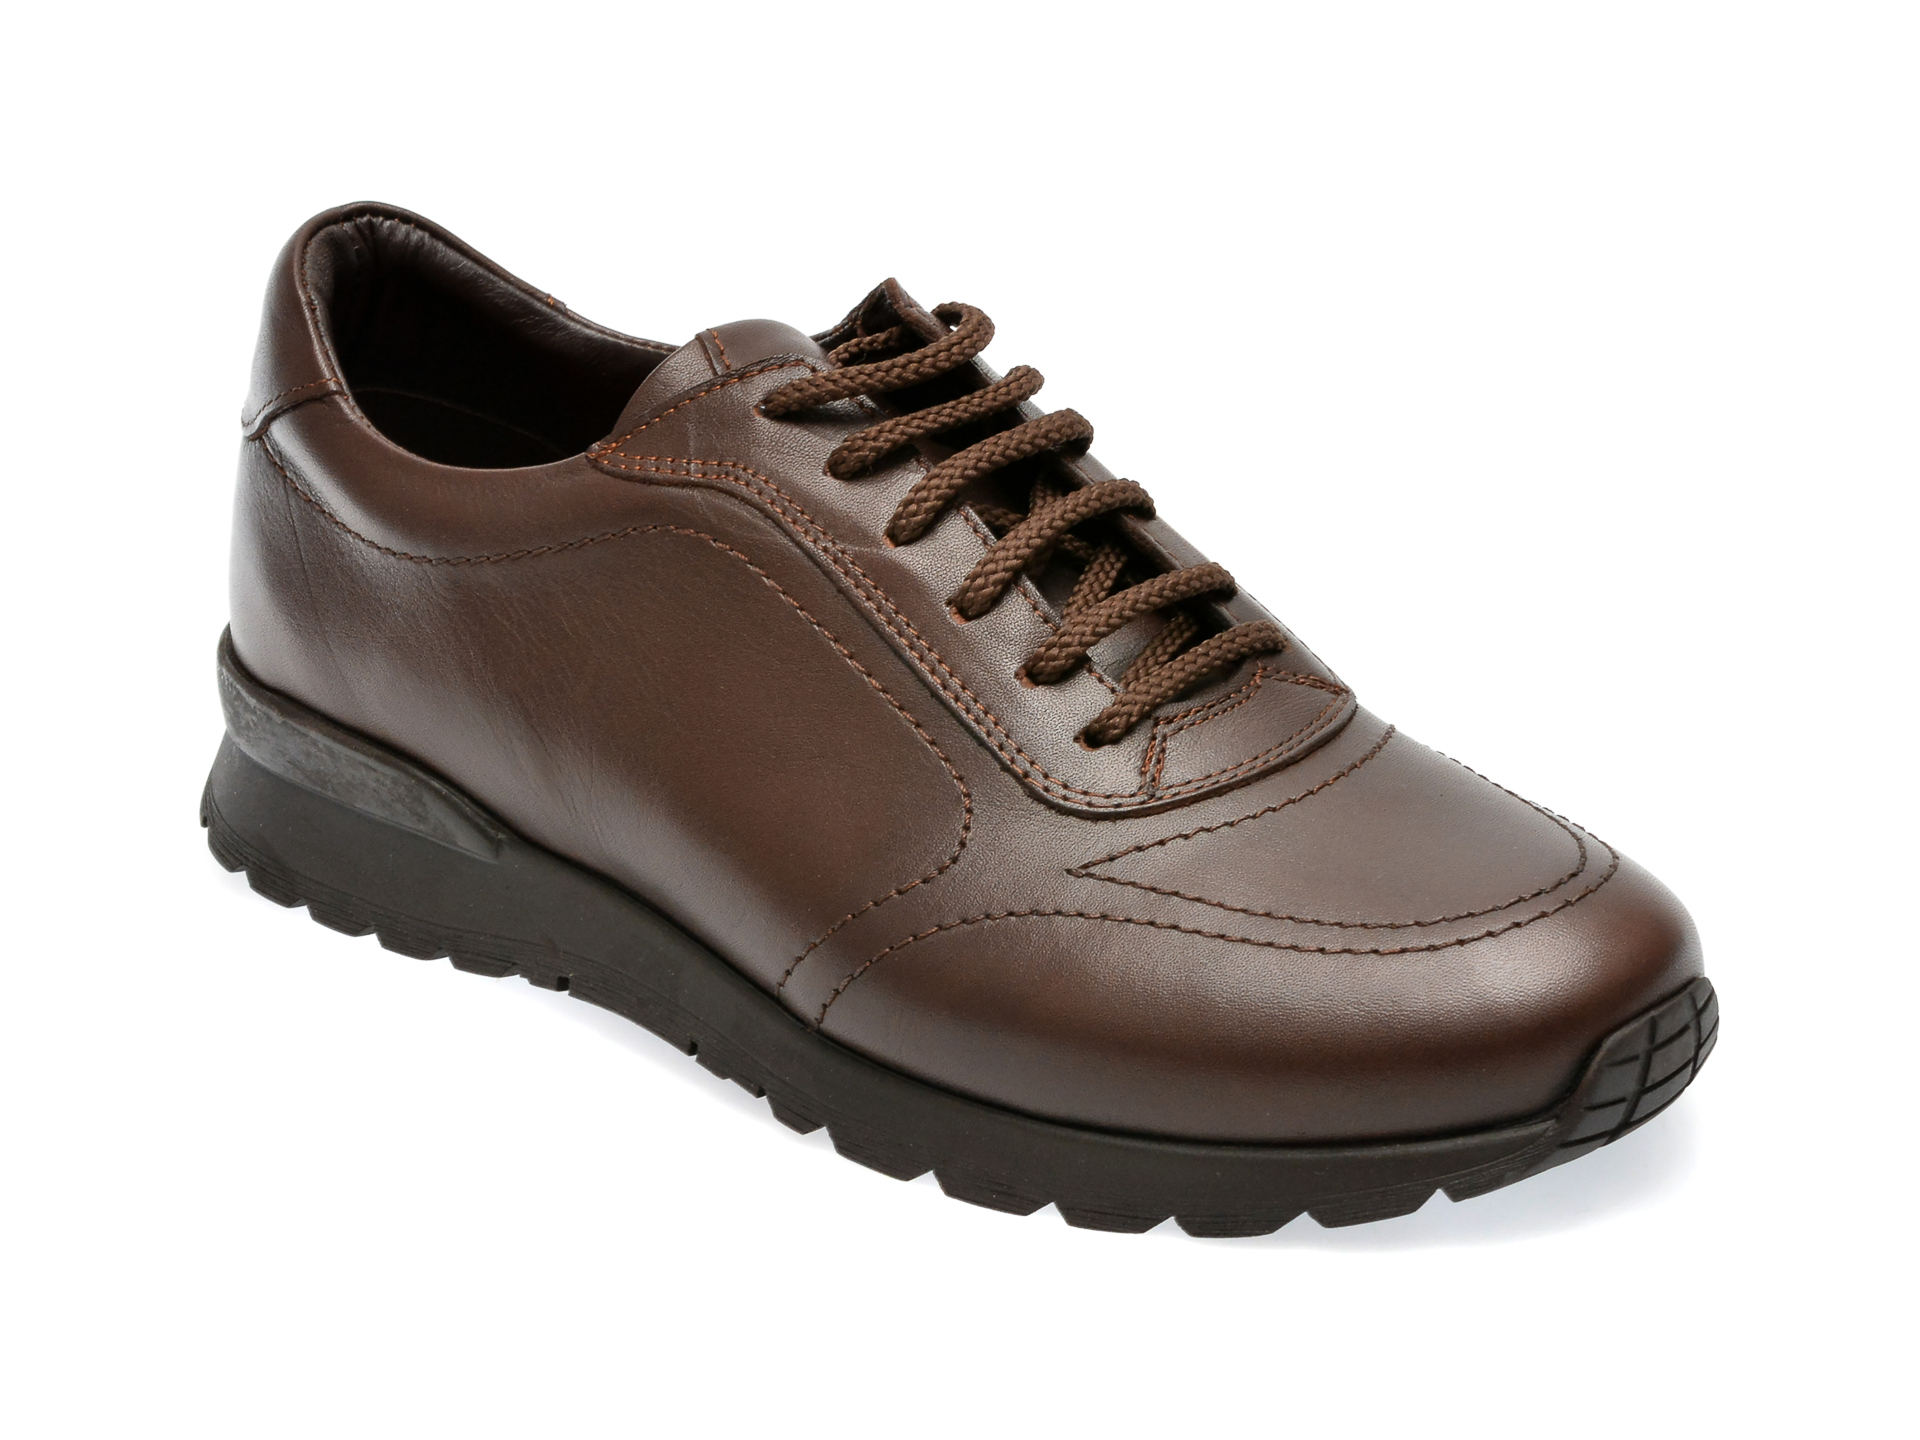 Pantofi OTTER maro, 54521, din piele naturala /barbati/pantofi